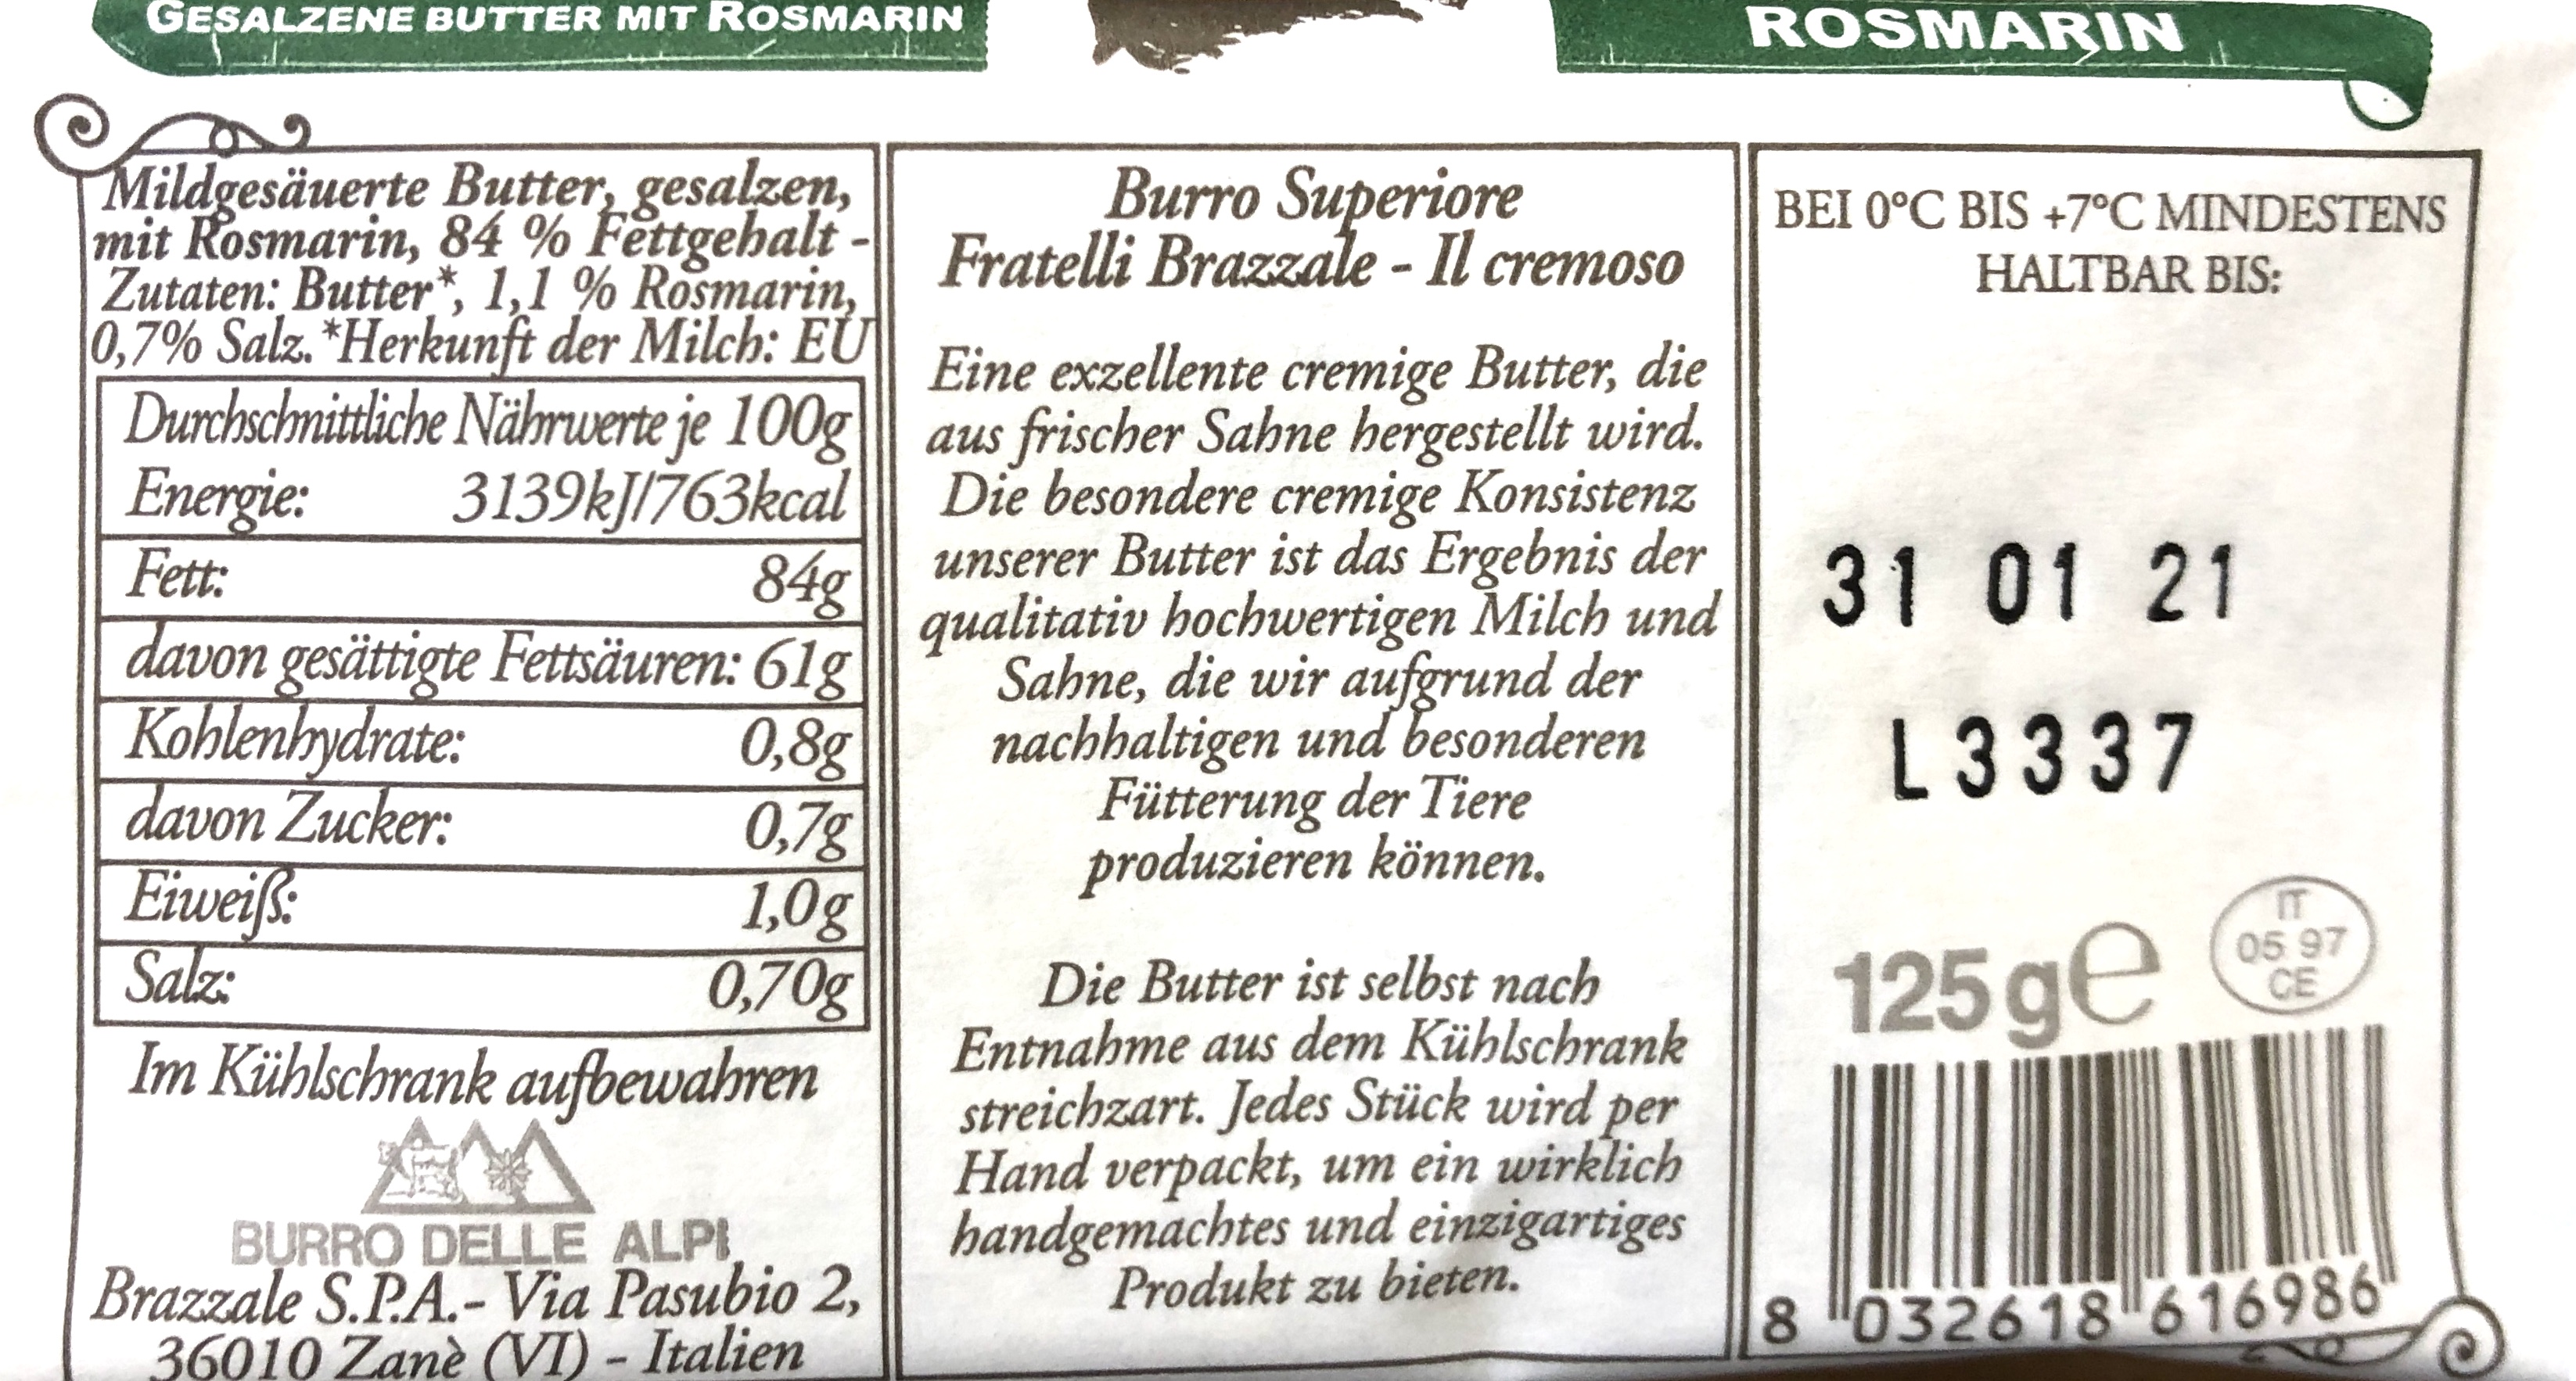 Premium Butter aus Rohrahm burro gesalzen Rosmarin